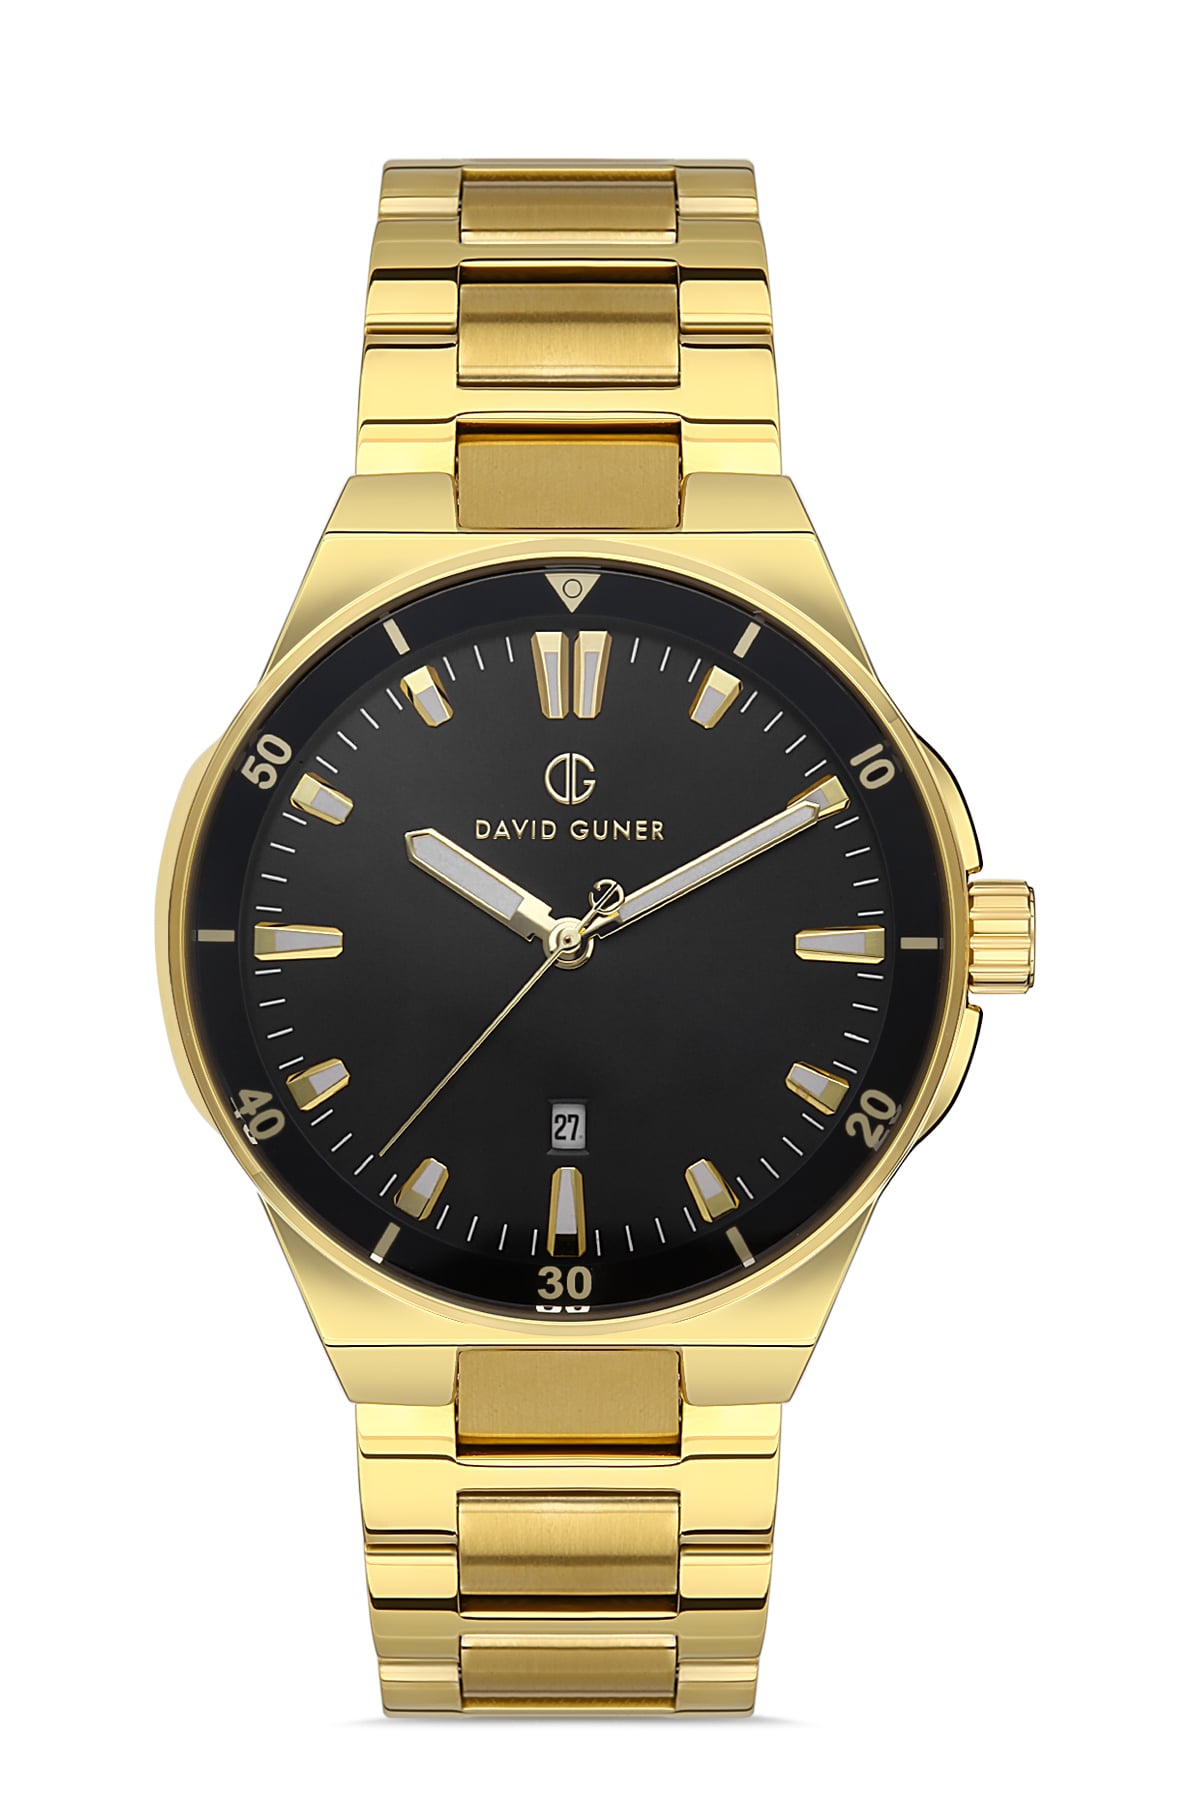 DAVID GUNER Black Dial Yellow Coated Men's Wristwatch